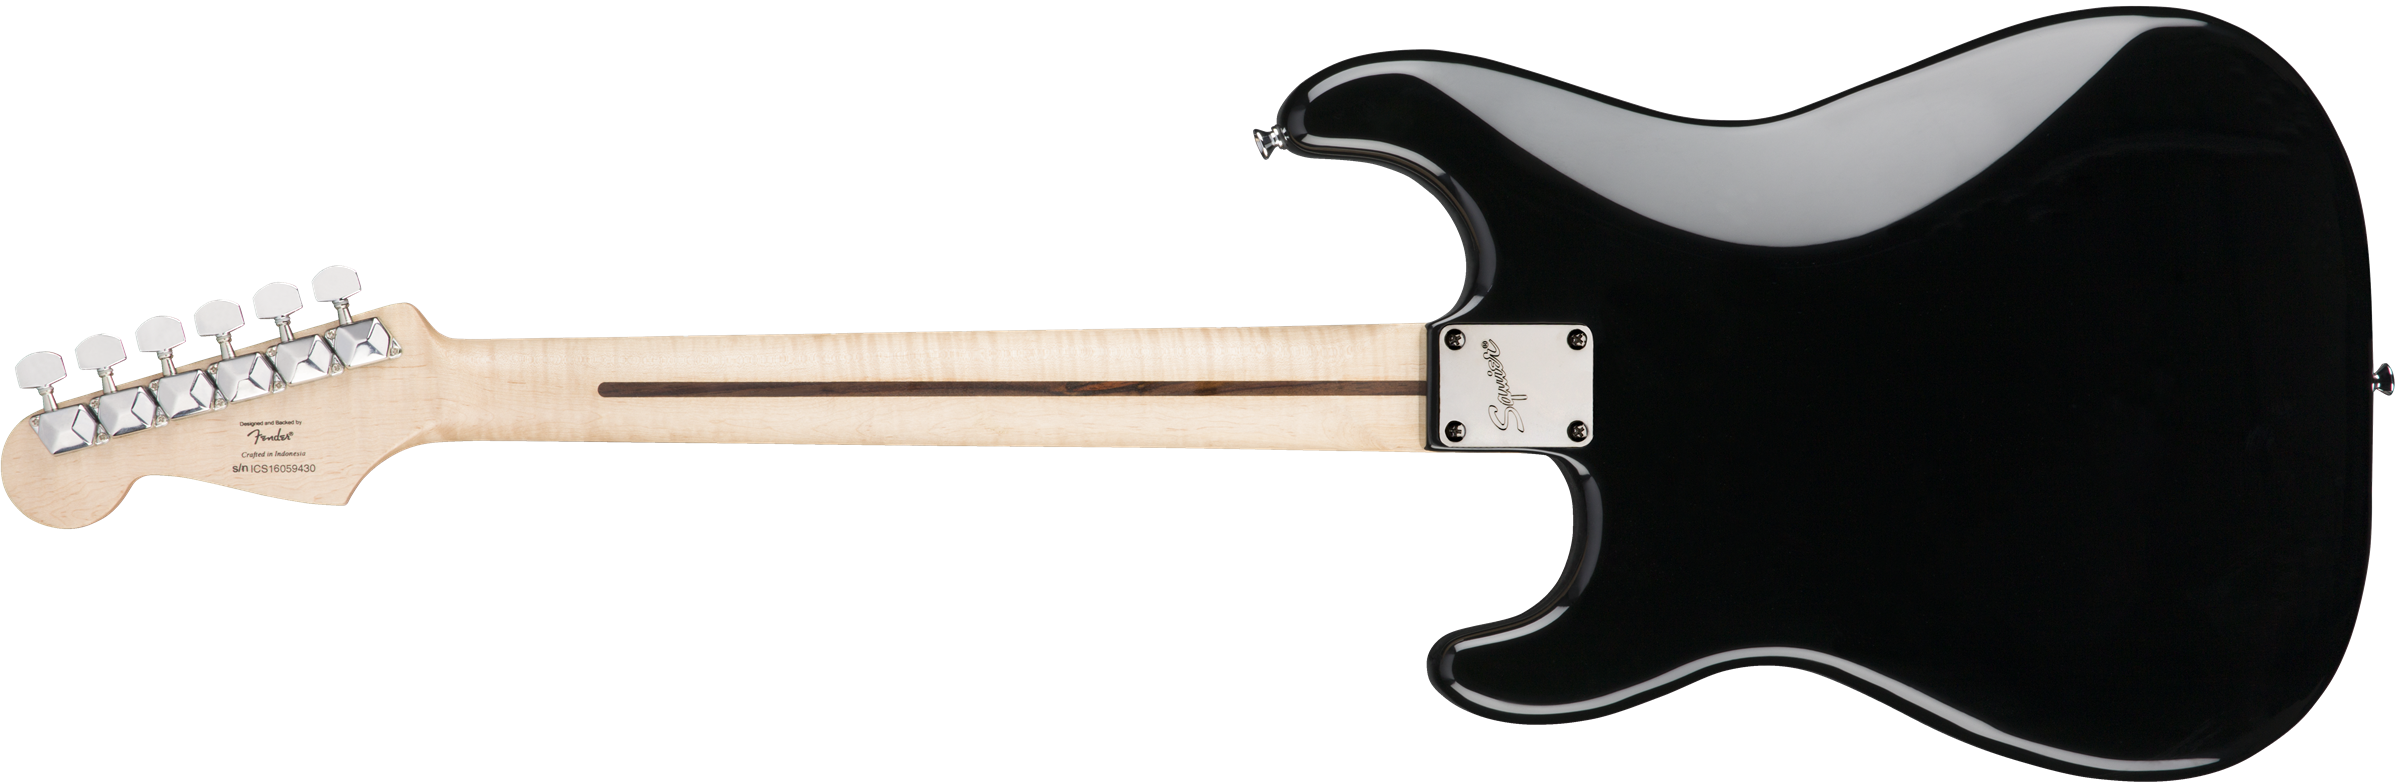 Squier Strat Bullet Ht 3s Lau - Black - Str shape electric guitar - Variation 1